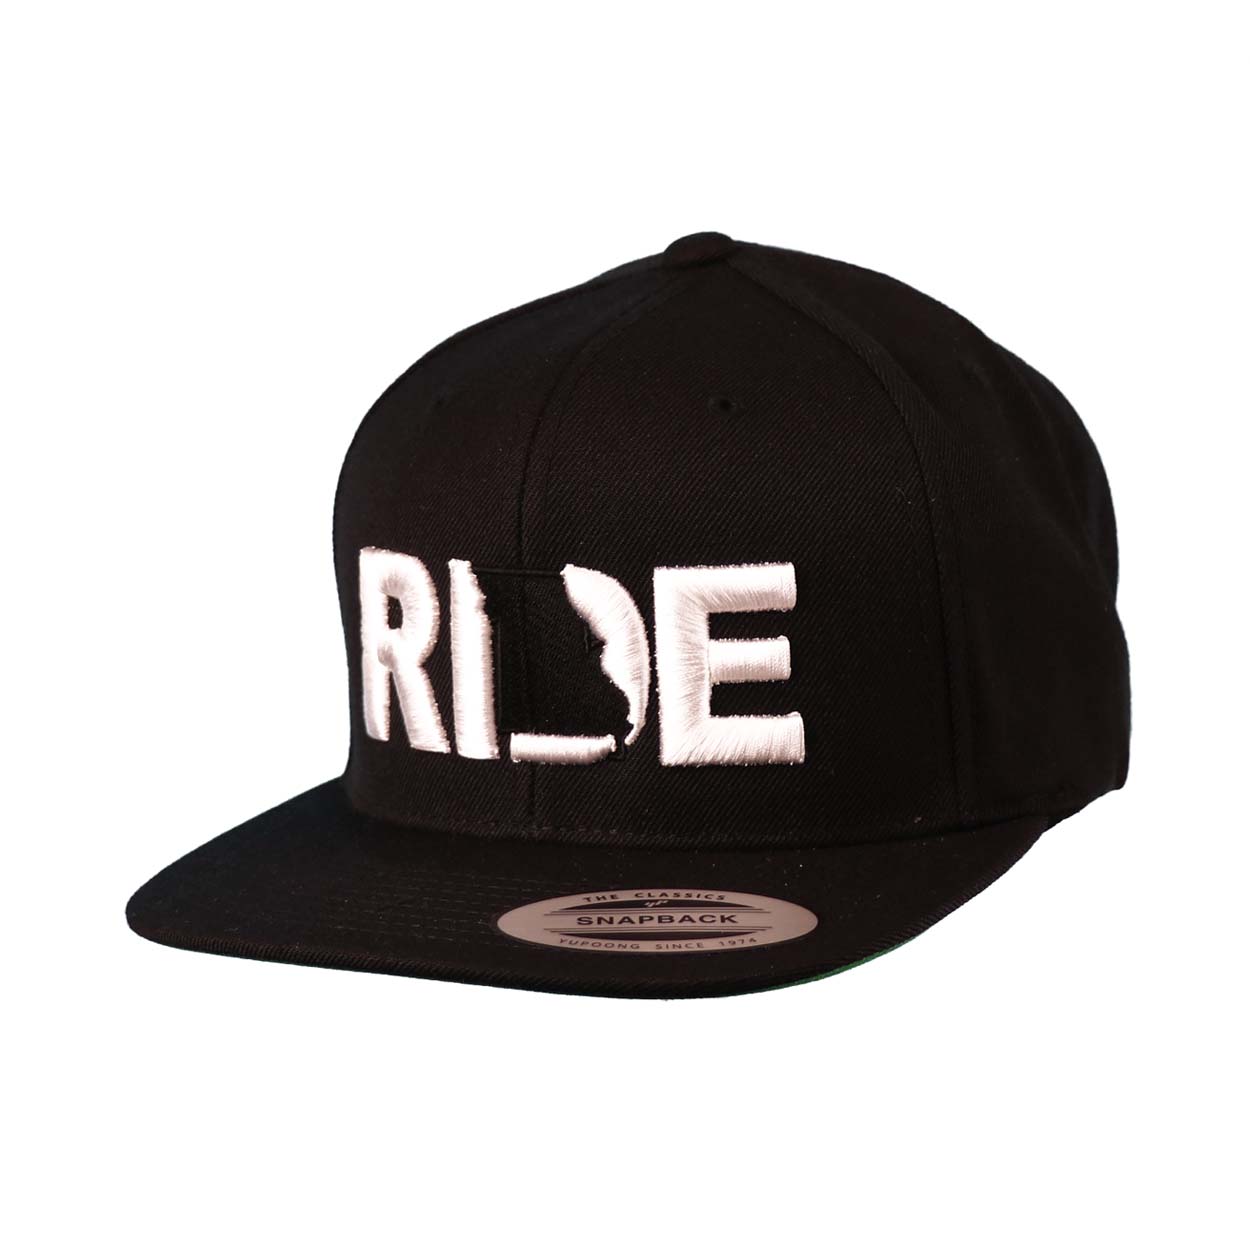 Ride Missouri Classic Pro 3D Puff Embroidered Snapback Flat Brim Hat Black